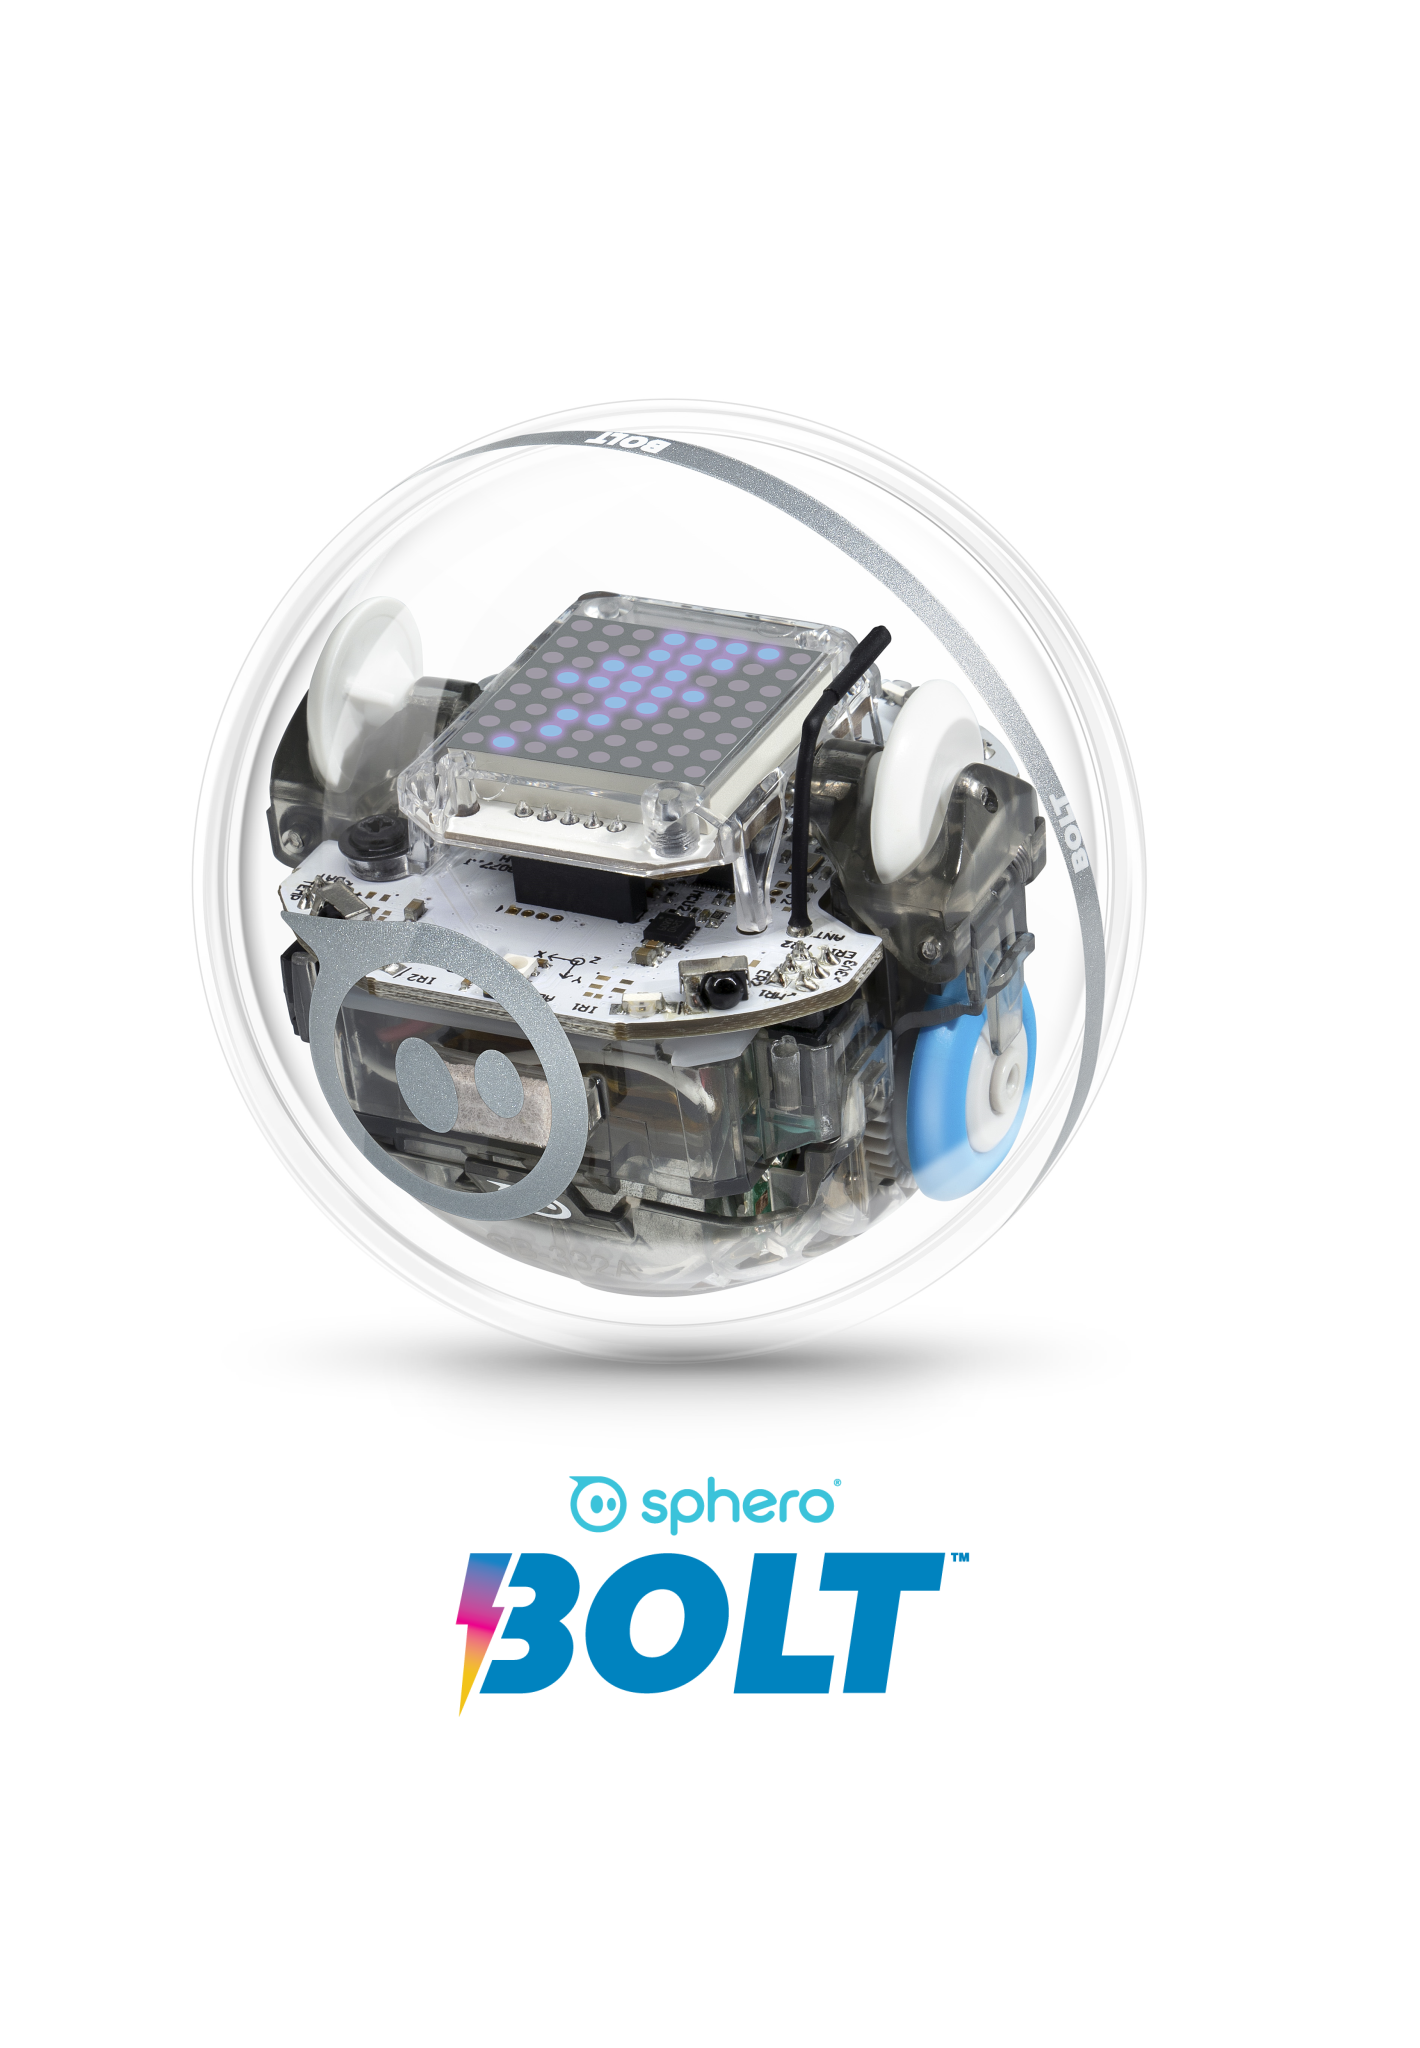 sphero robotic ball